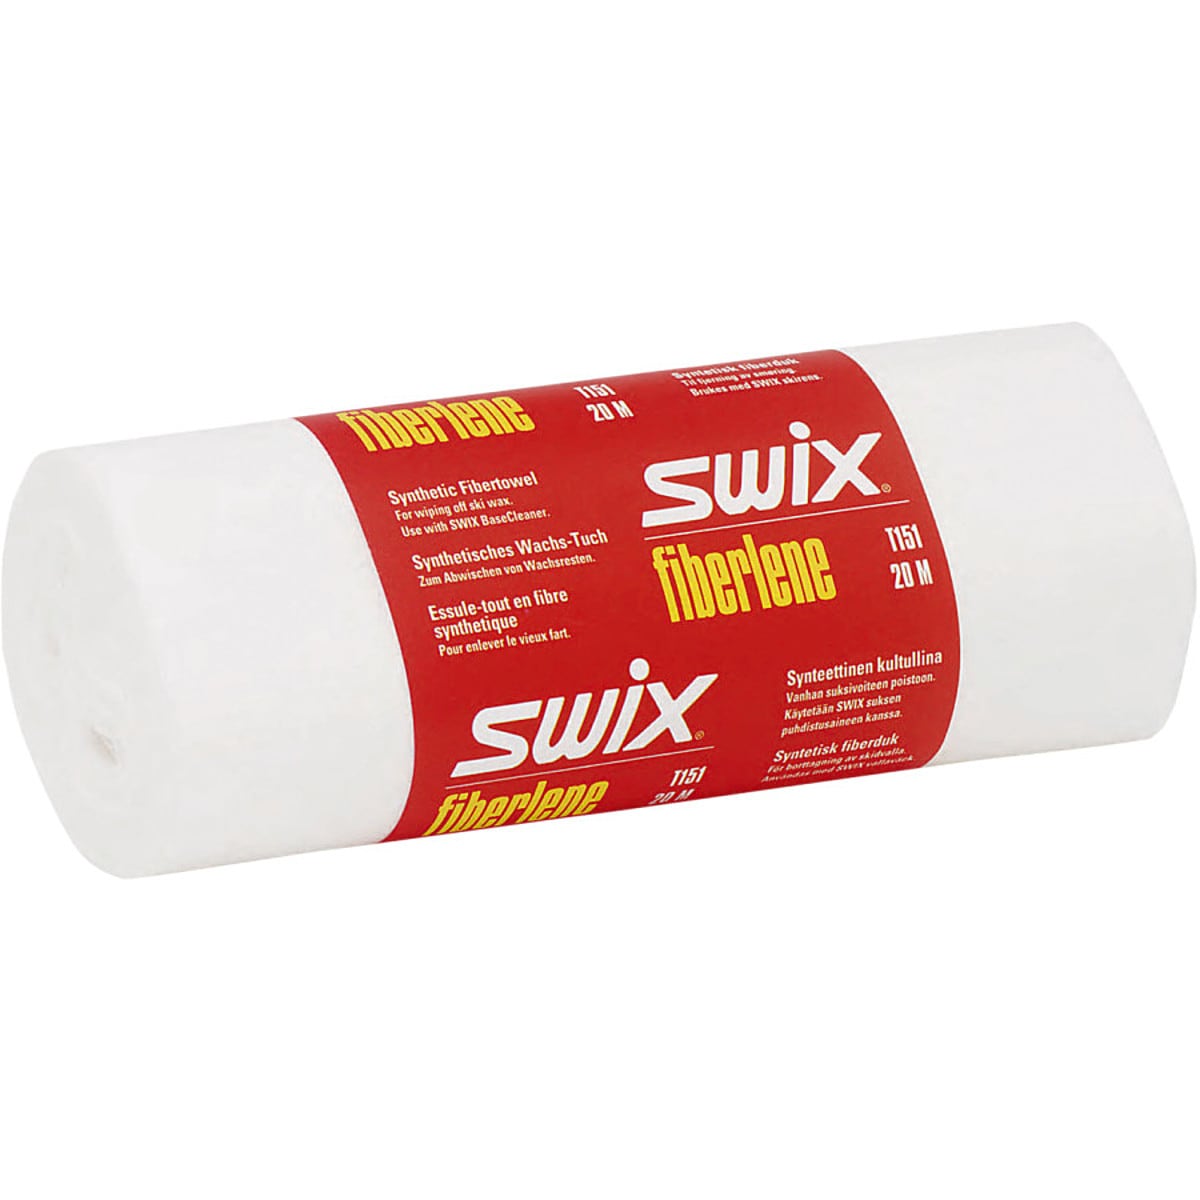 Swix Fiberlene Cleaning and Ironing Towel